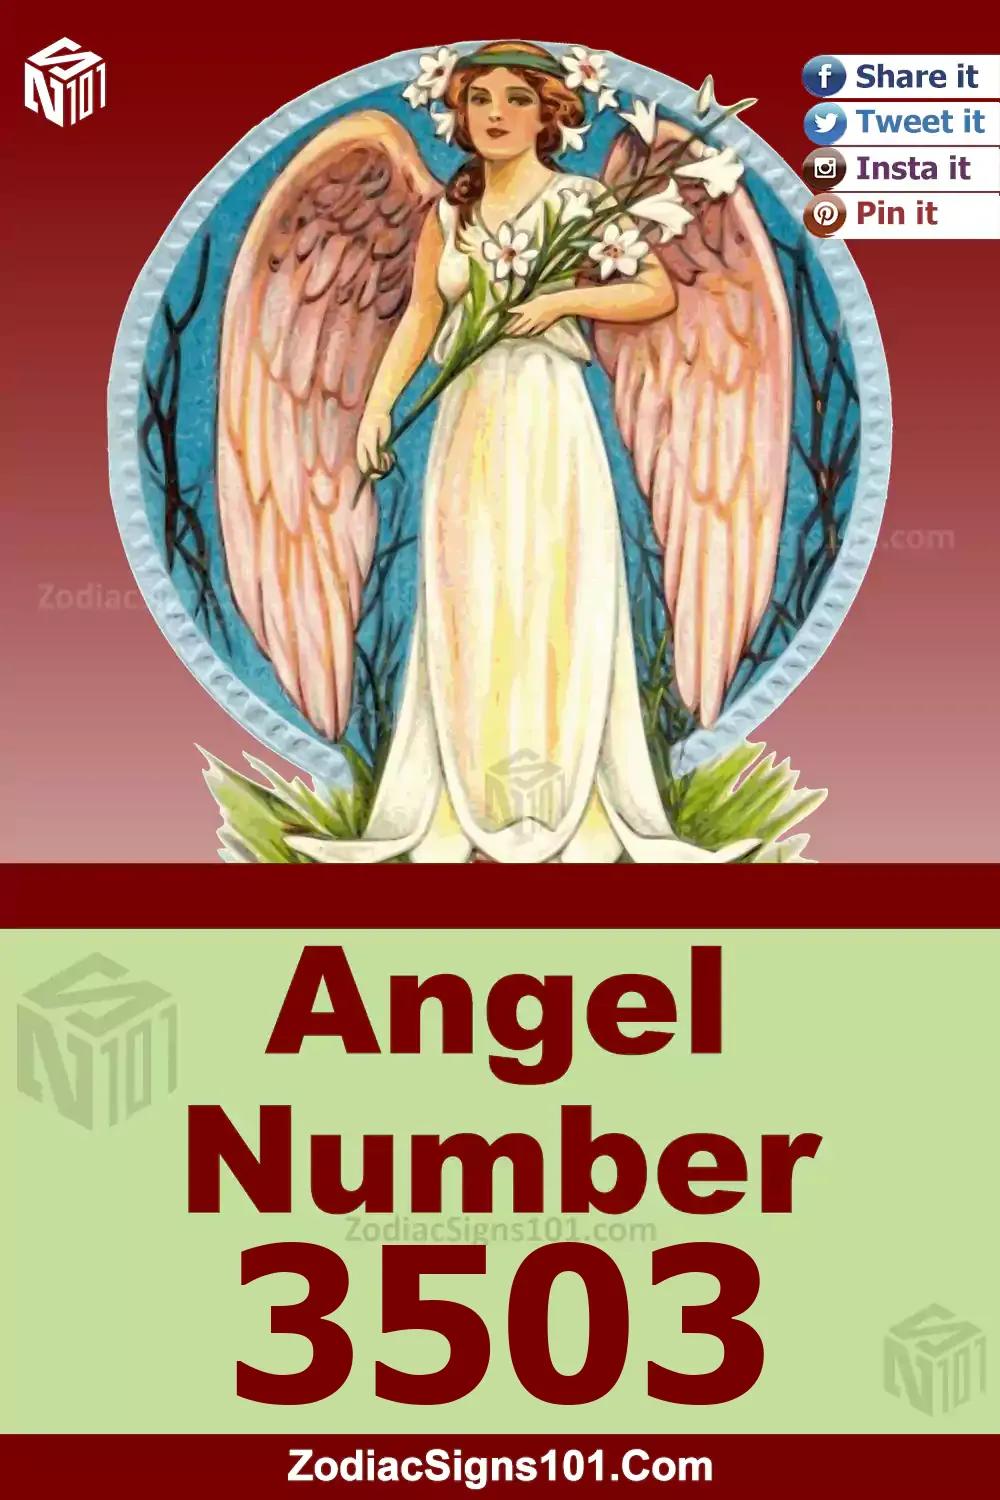 3503-Angel-Number-Meaning.jpg